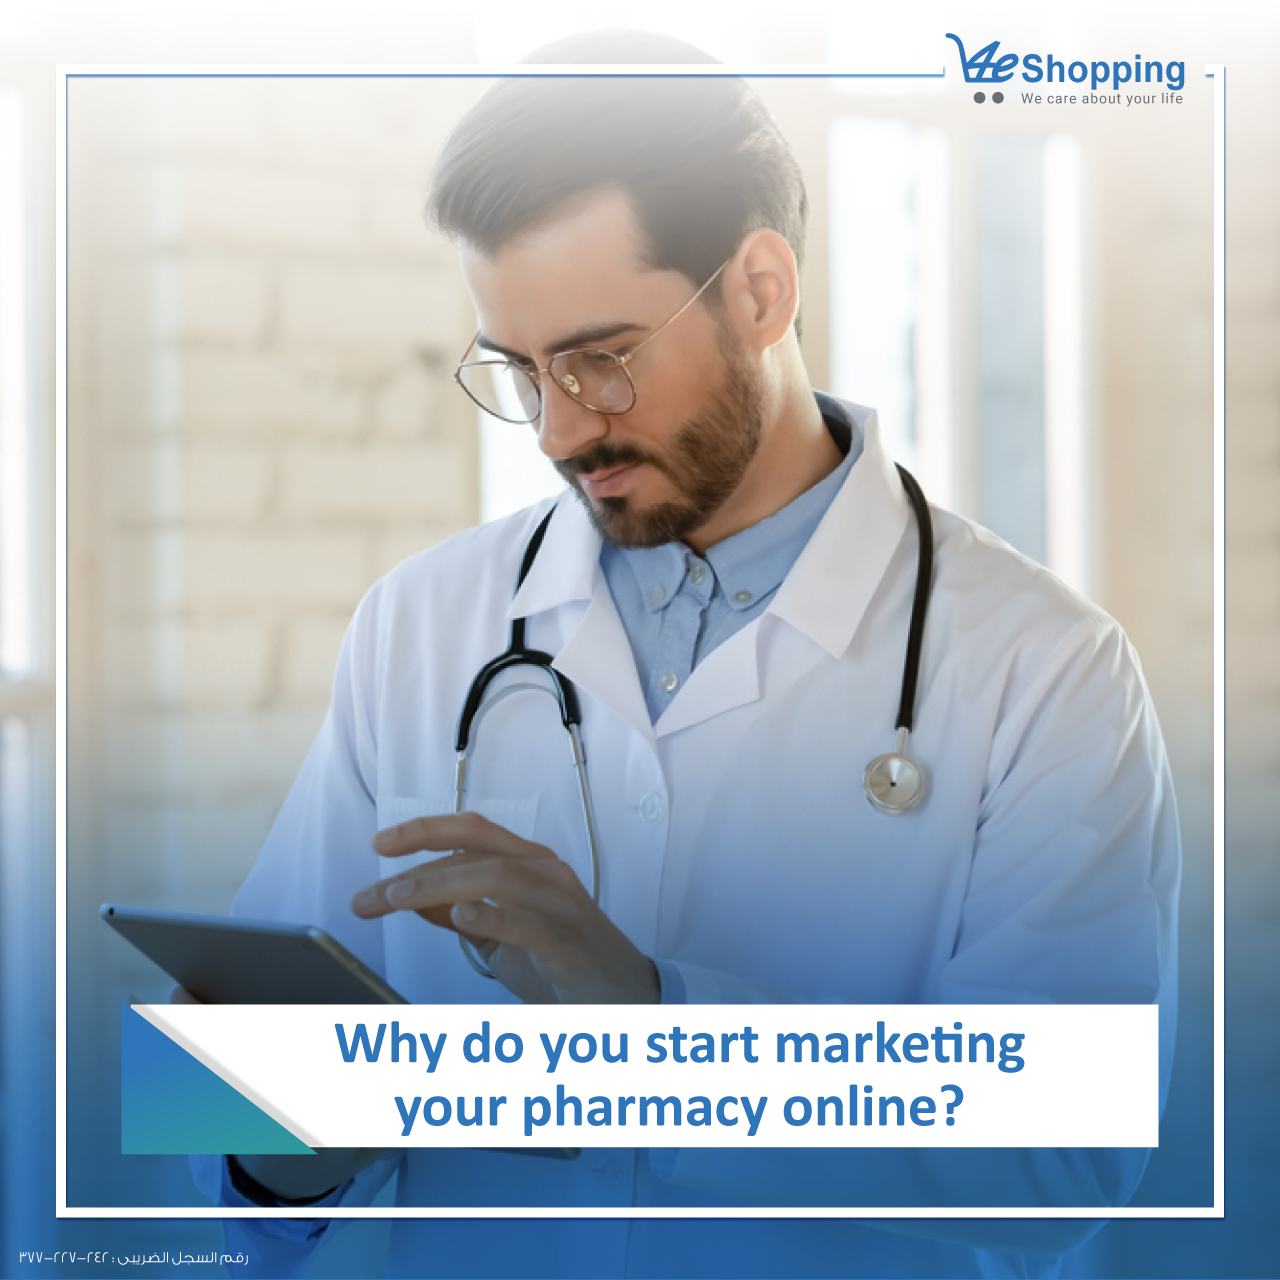 Purpose of digital marketing for pharmacy